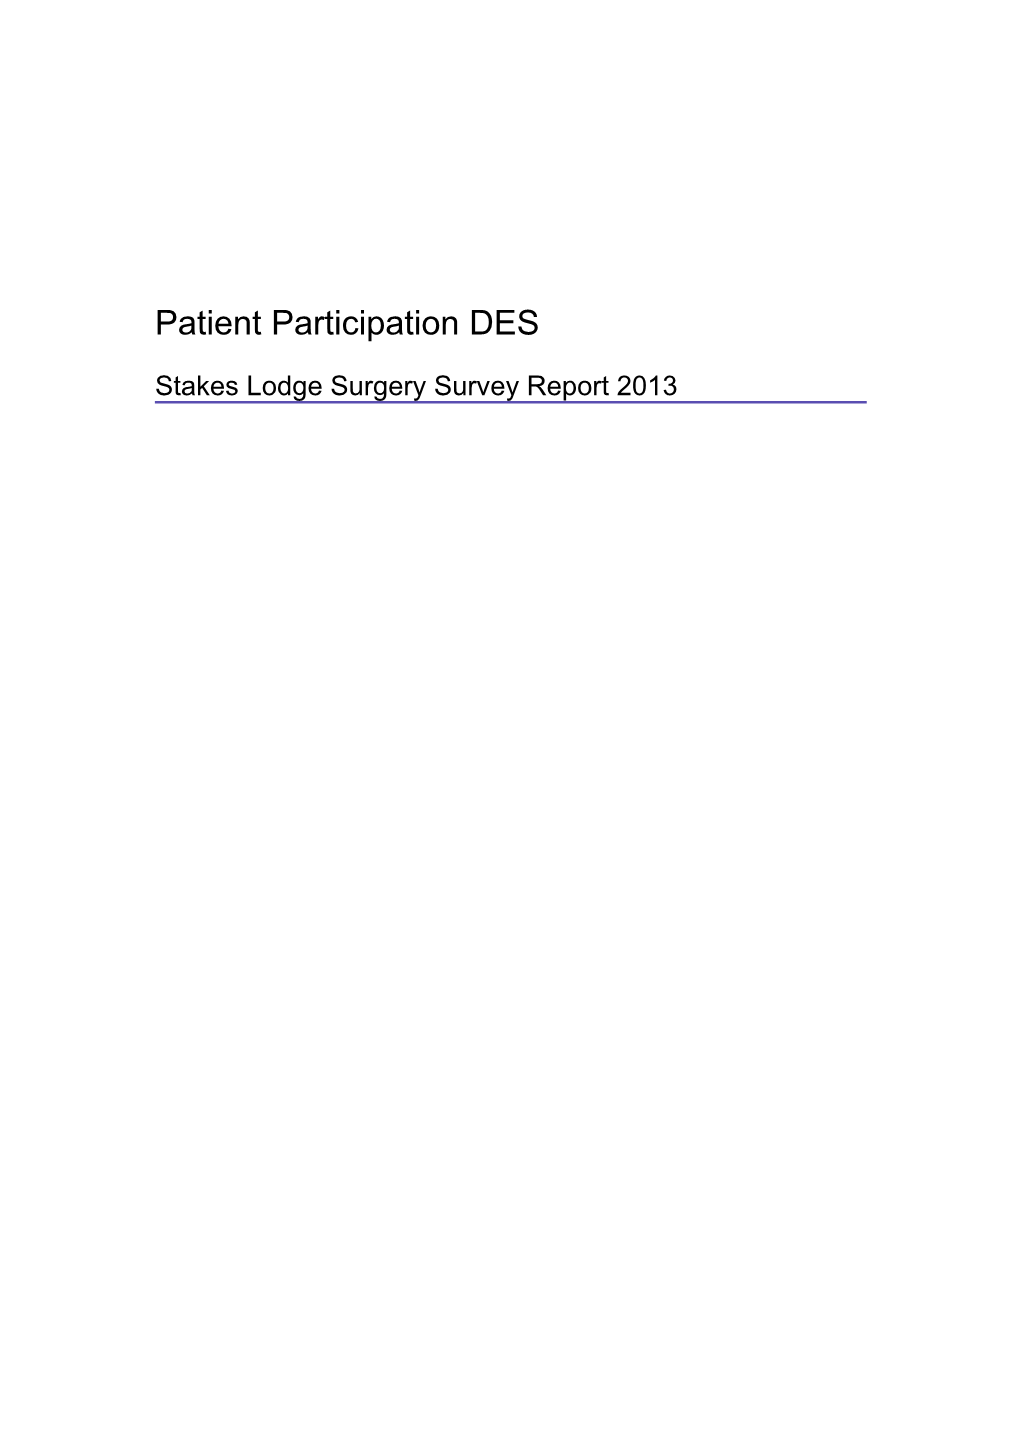 Stakes Lodge Surgery Profilepage 3